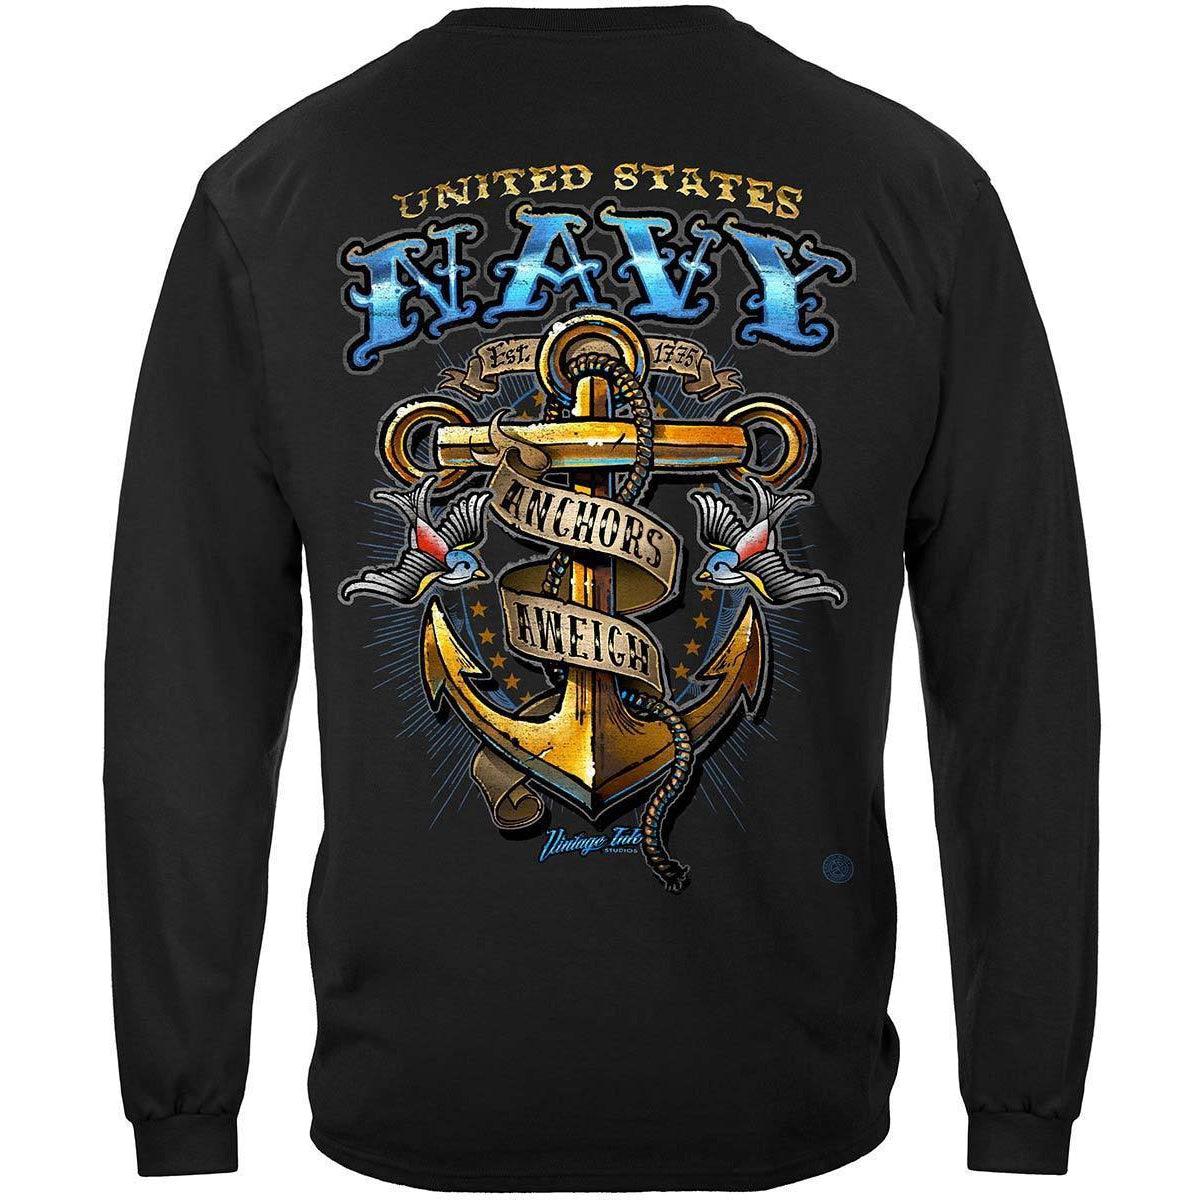 US NAVY Vintage Tattoo Classic Anchor United States Navy USN Premium T-Shirt - Military Republic